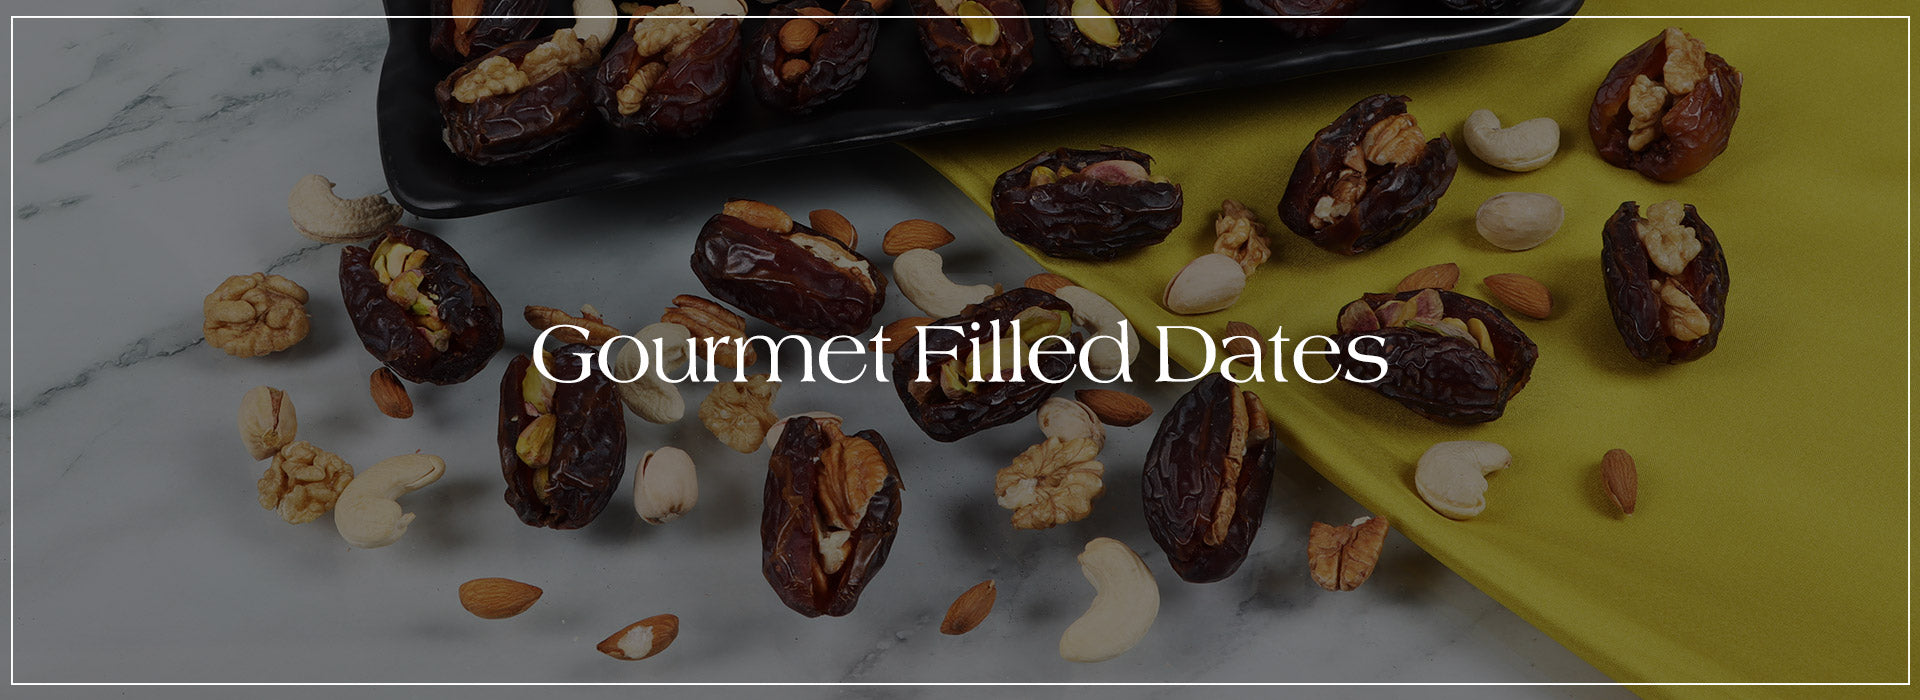 Gourmet Filled Dates